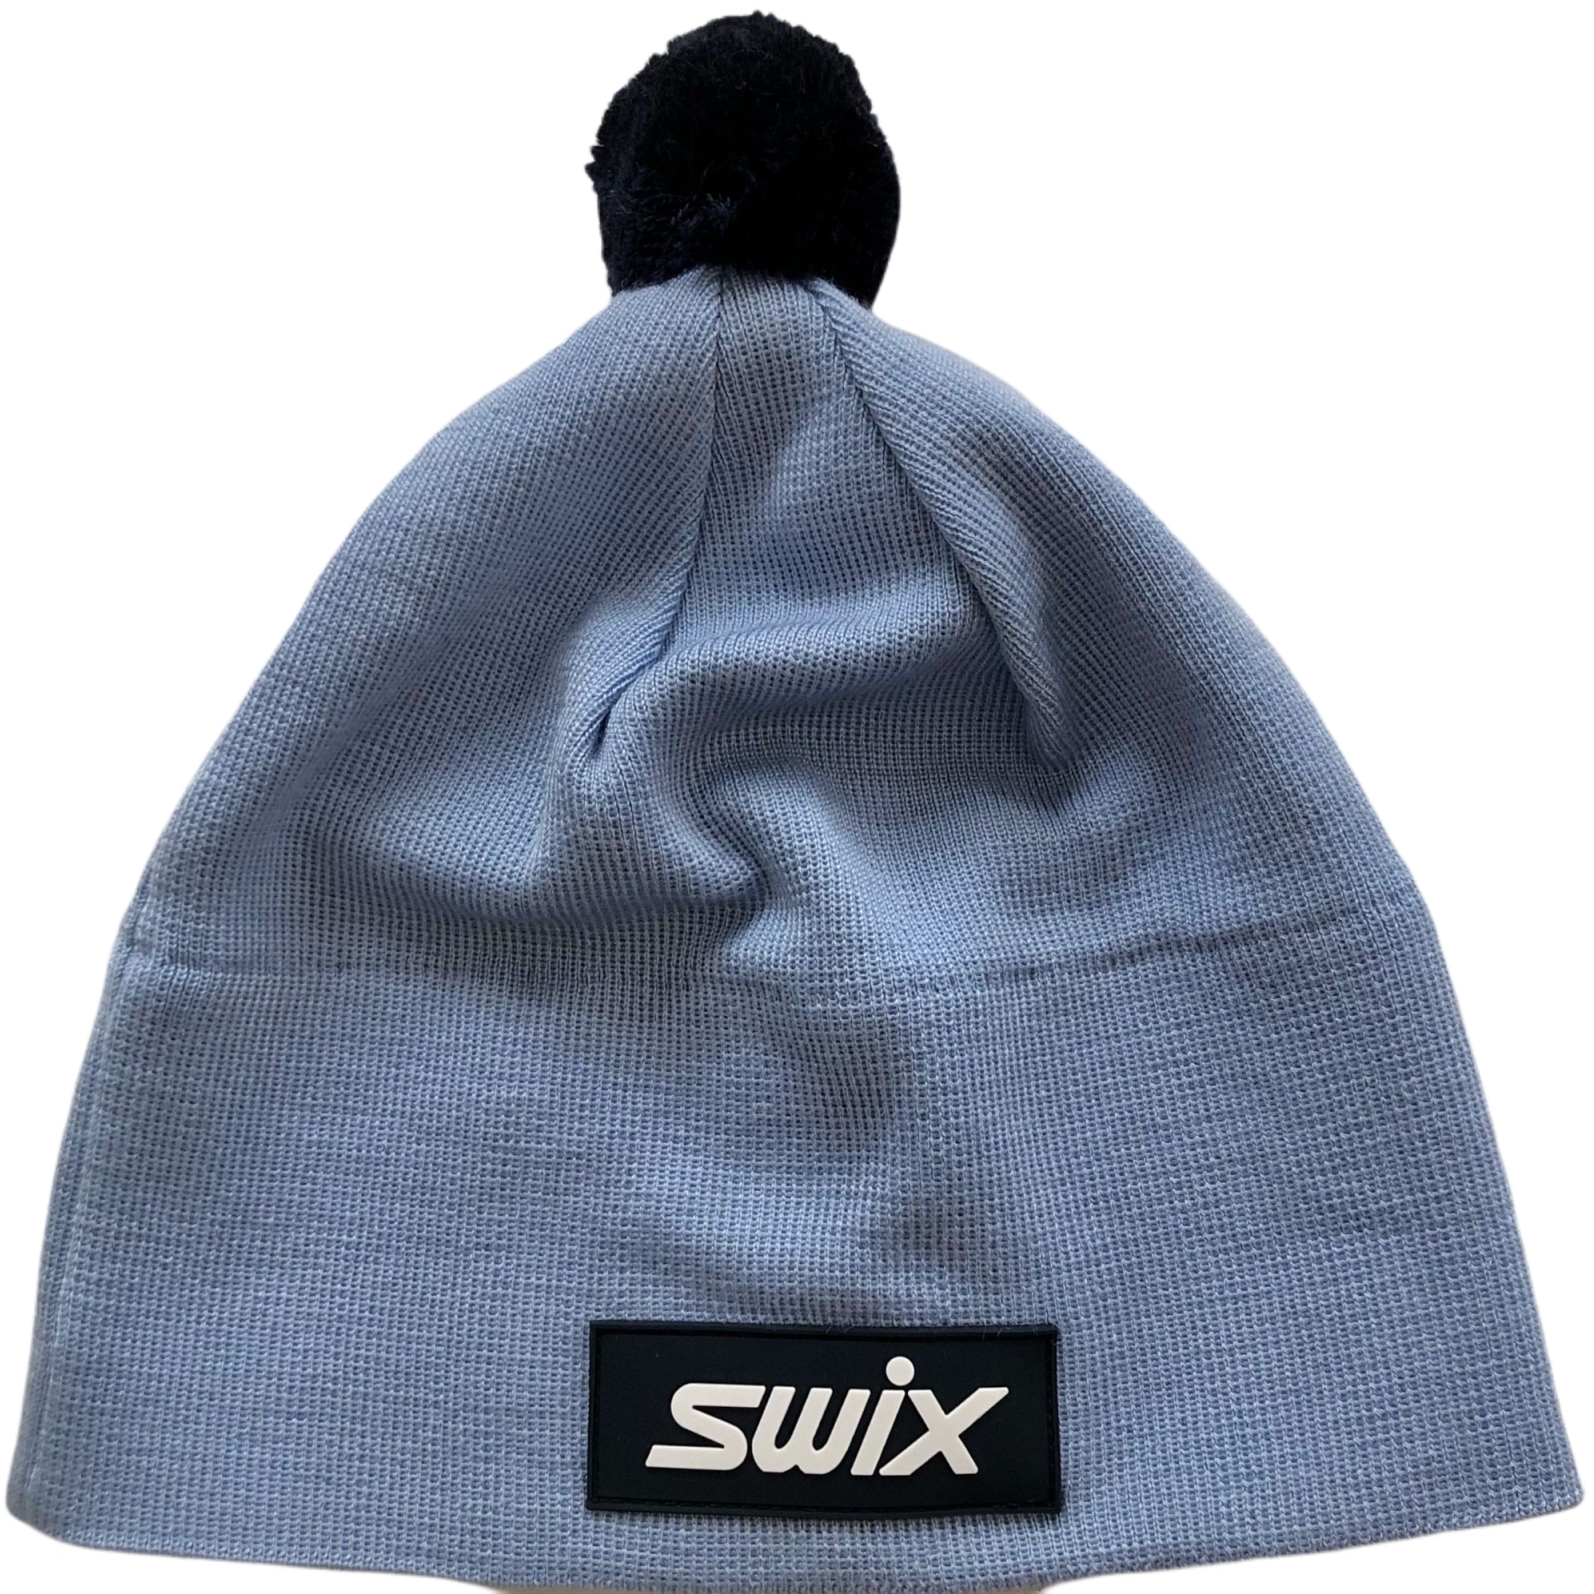 E-shop Swix Tradition hat - Blue Bell/Dark Navy 56